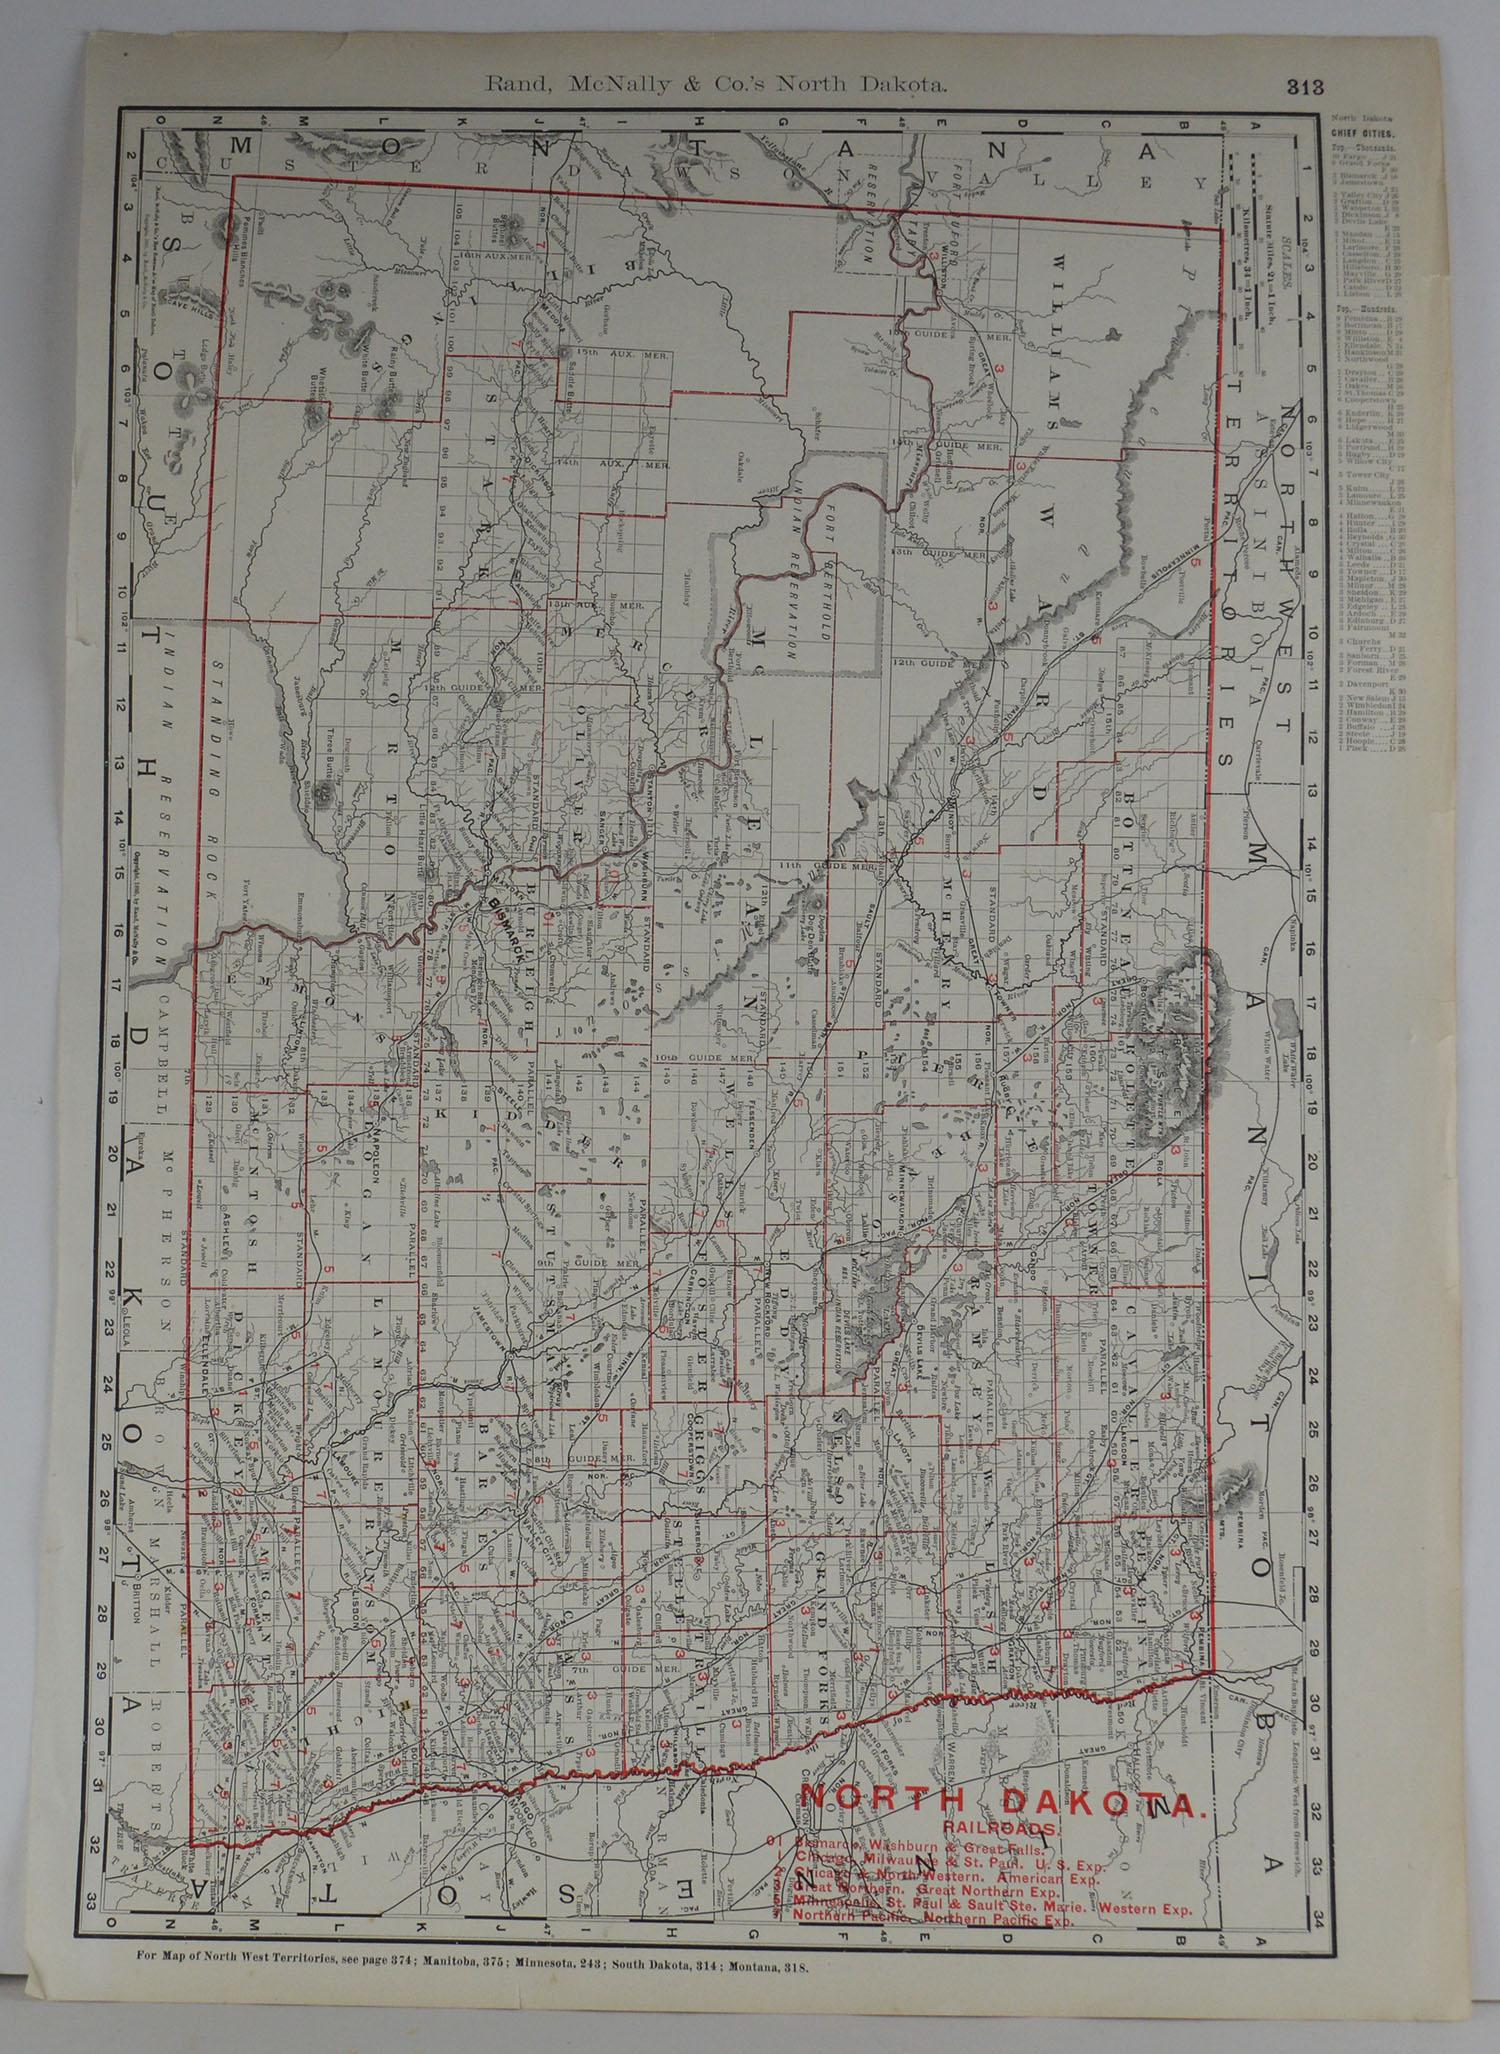 American Original Antique Map of North Dakota by Rand McNally, circa 1900